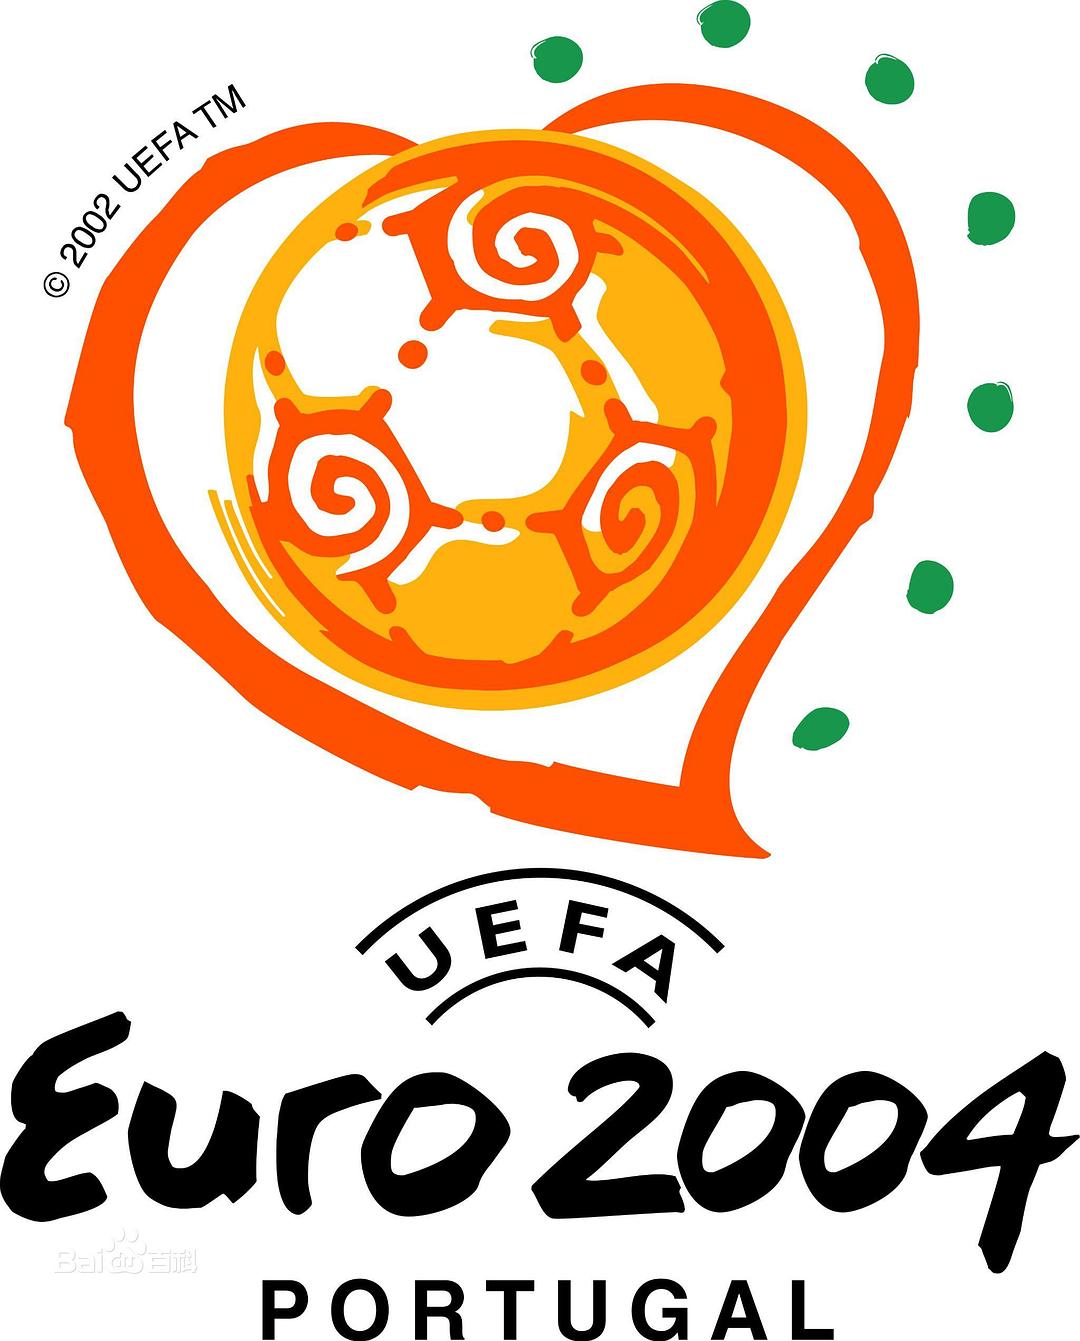 2004 UEFA European Football Championship